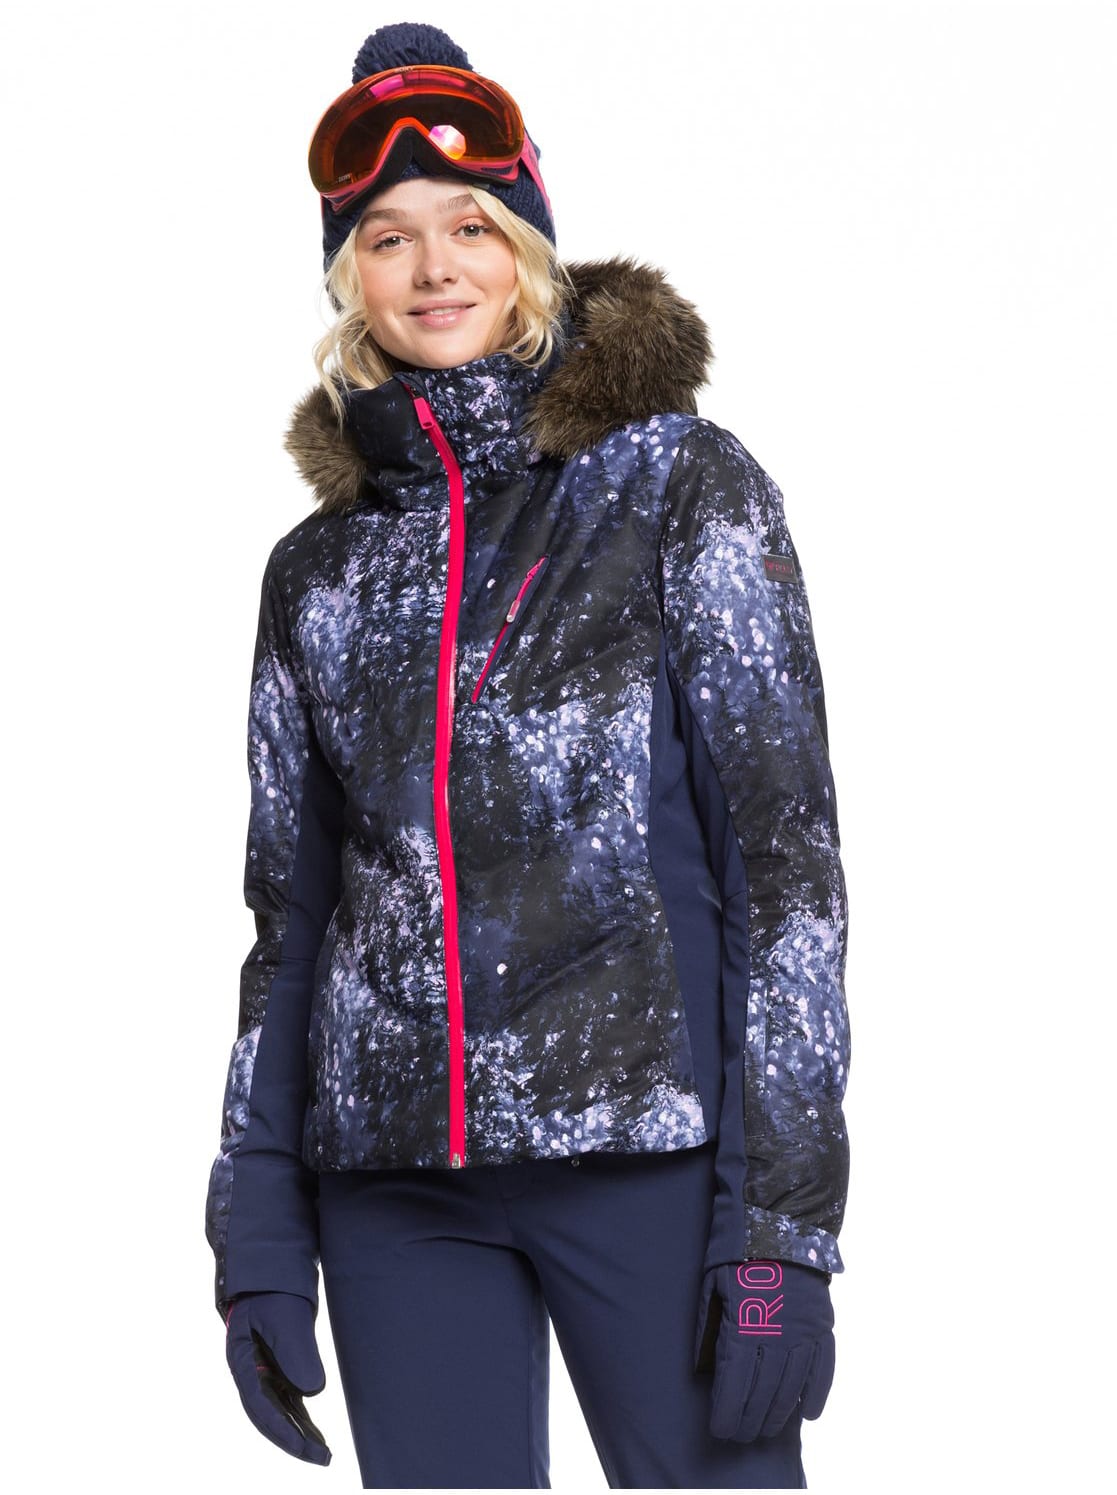 Hot Sale Roxy Snowstorm Plus Snowboard Jacket Womens glamor model | sale  hot at